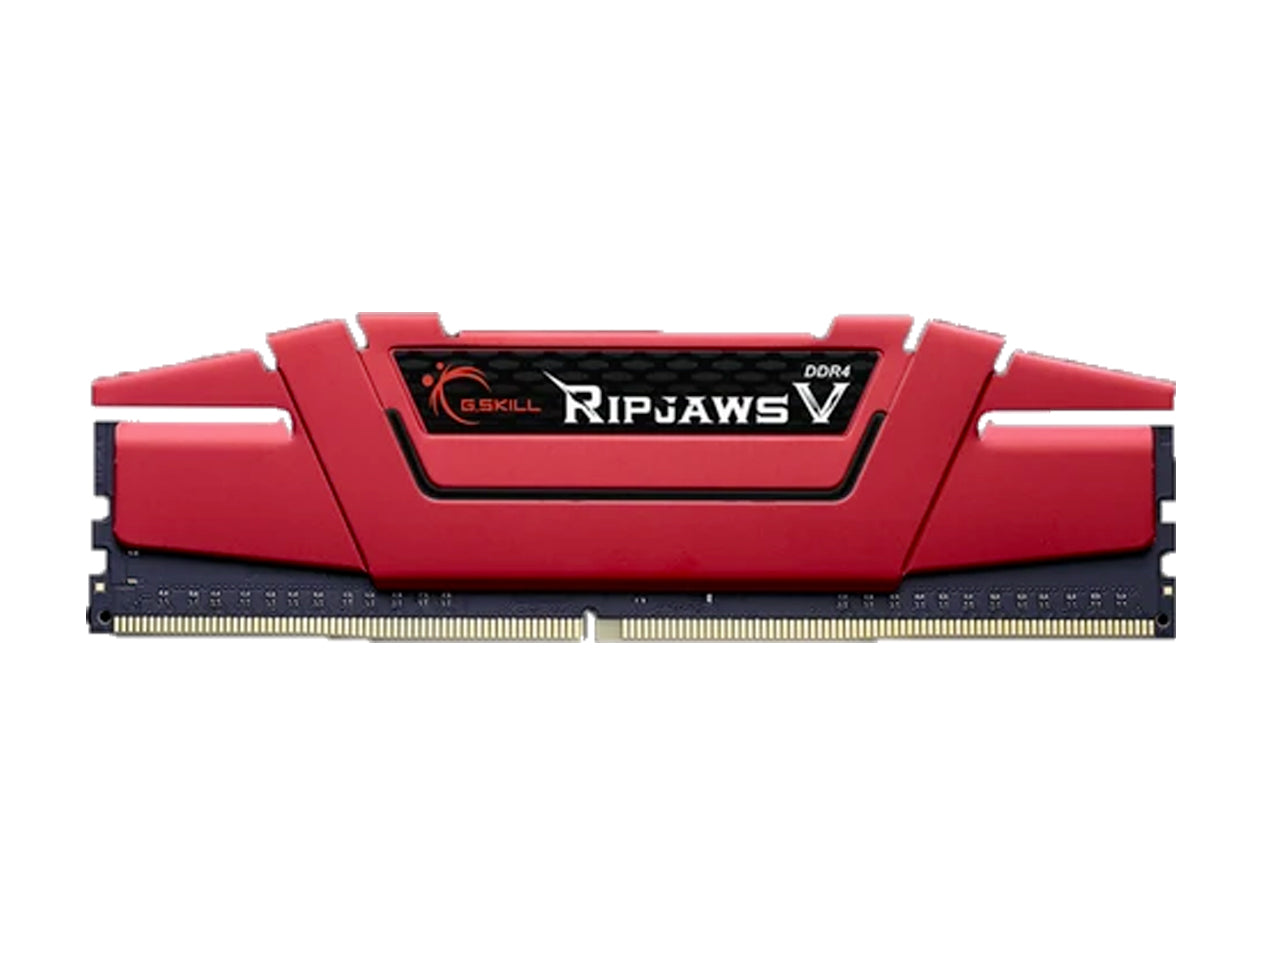 G.Skill Ripjaws V 16GB DDR4 2666MHZ RAM